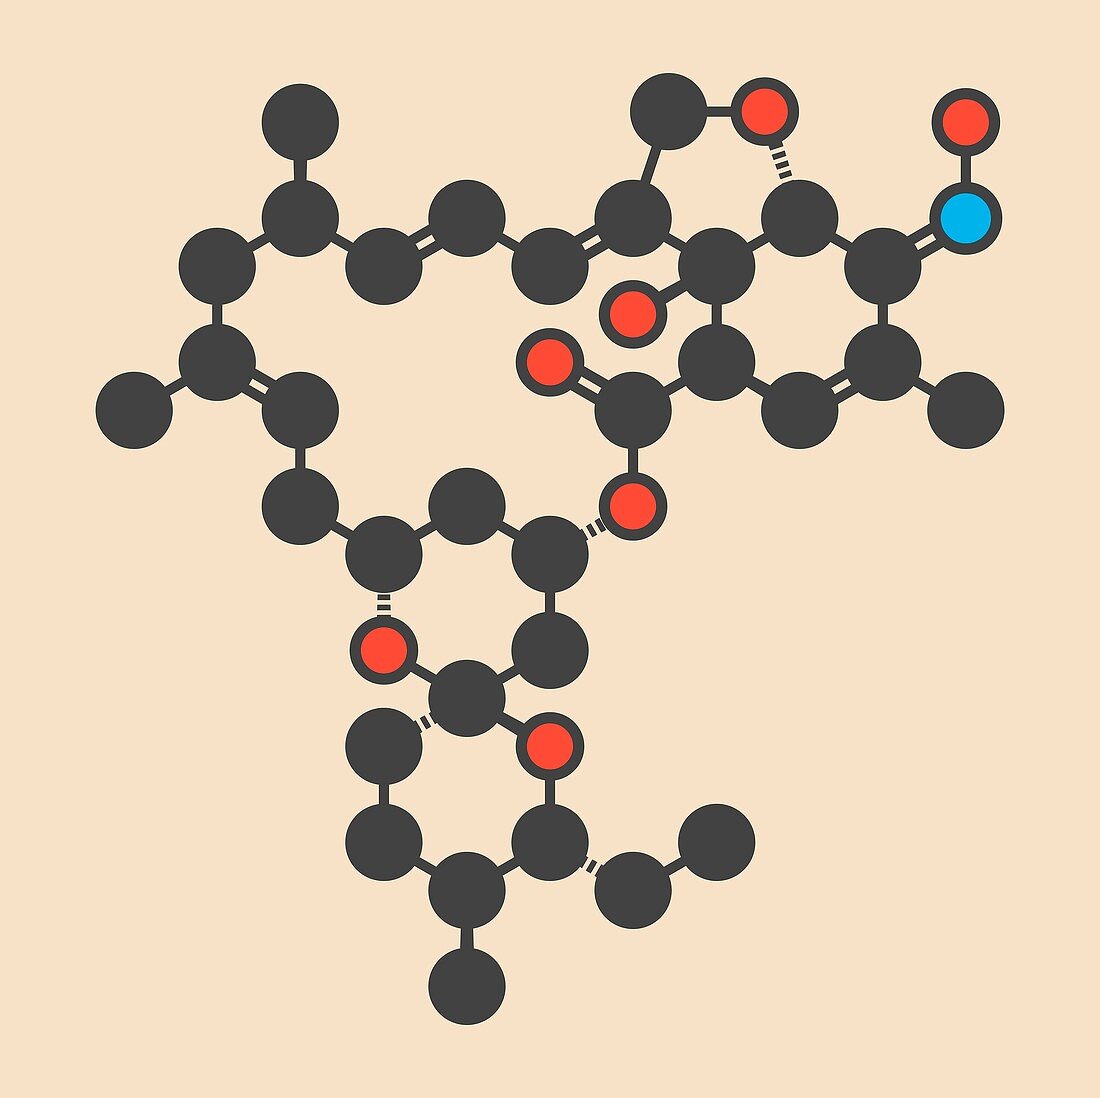 Milbemycin oxime antiparasitic molecule